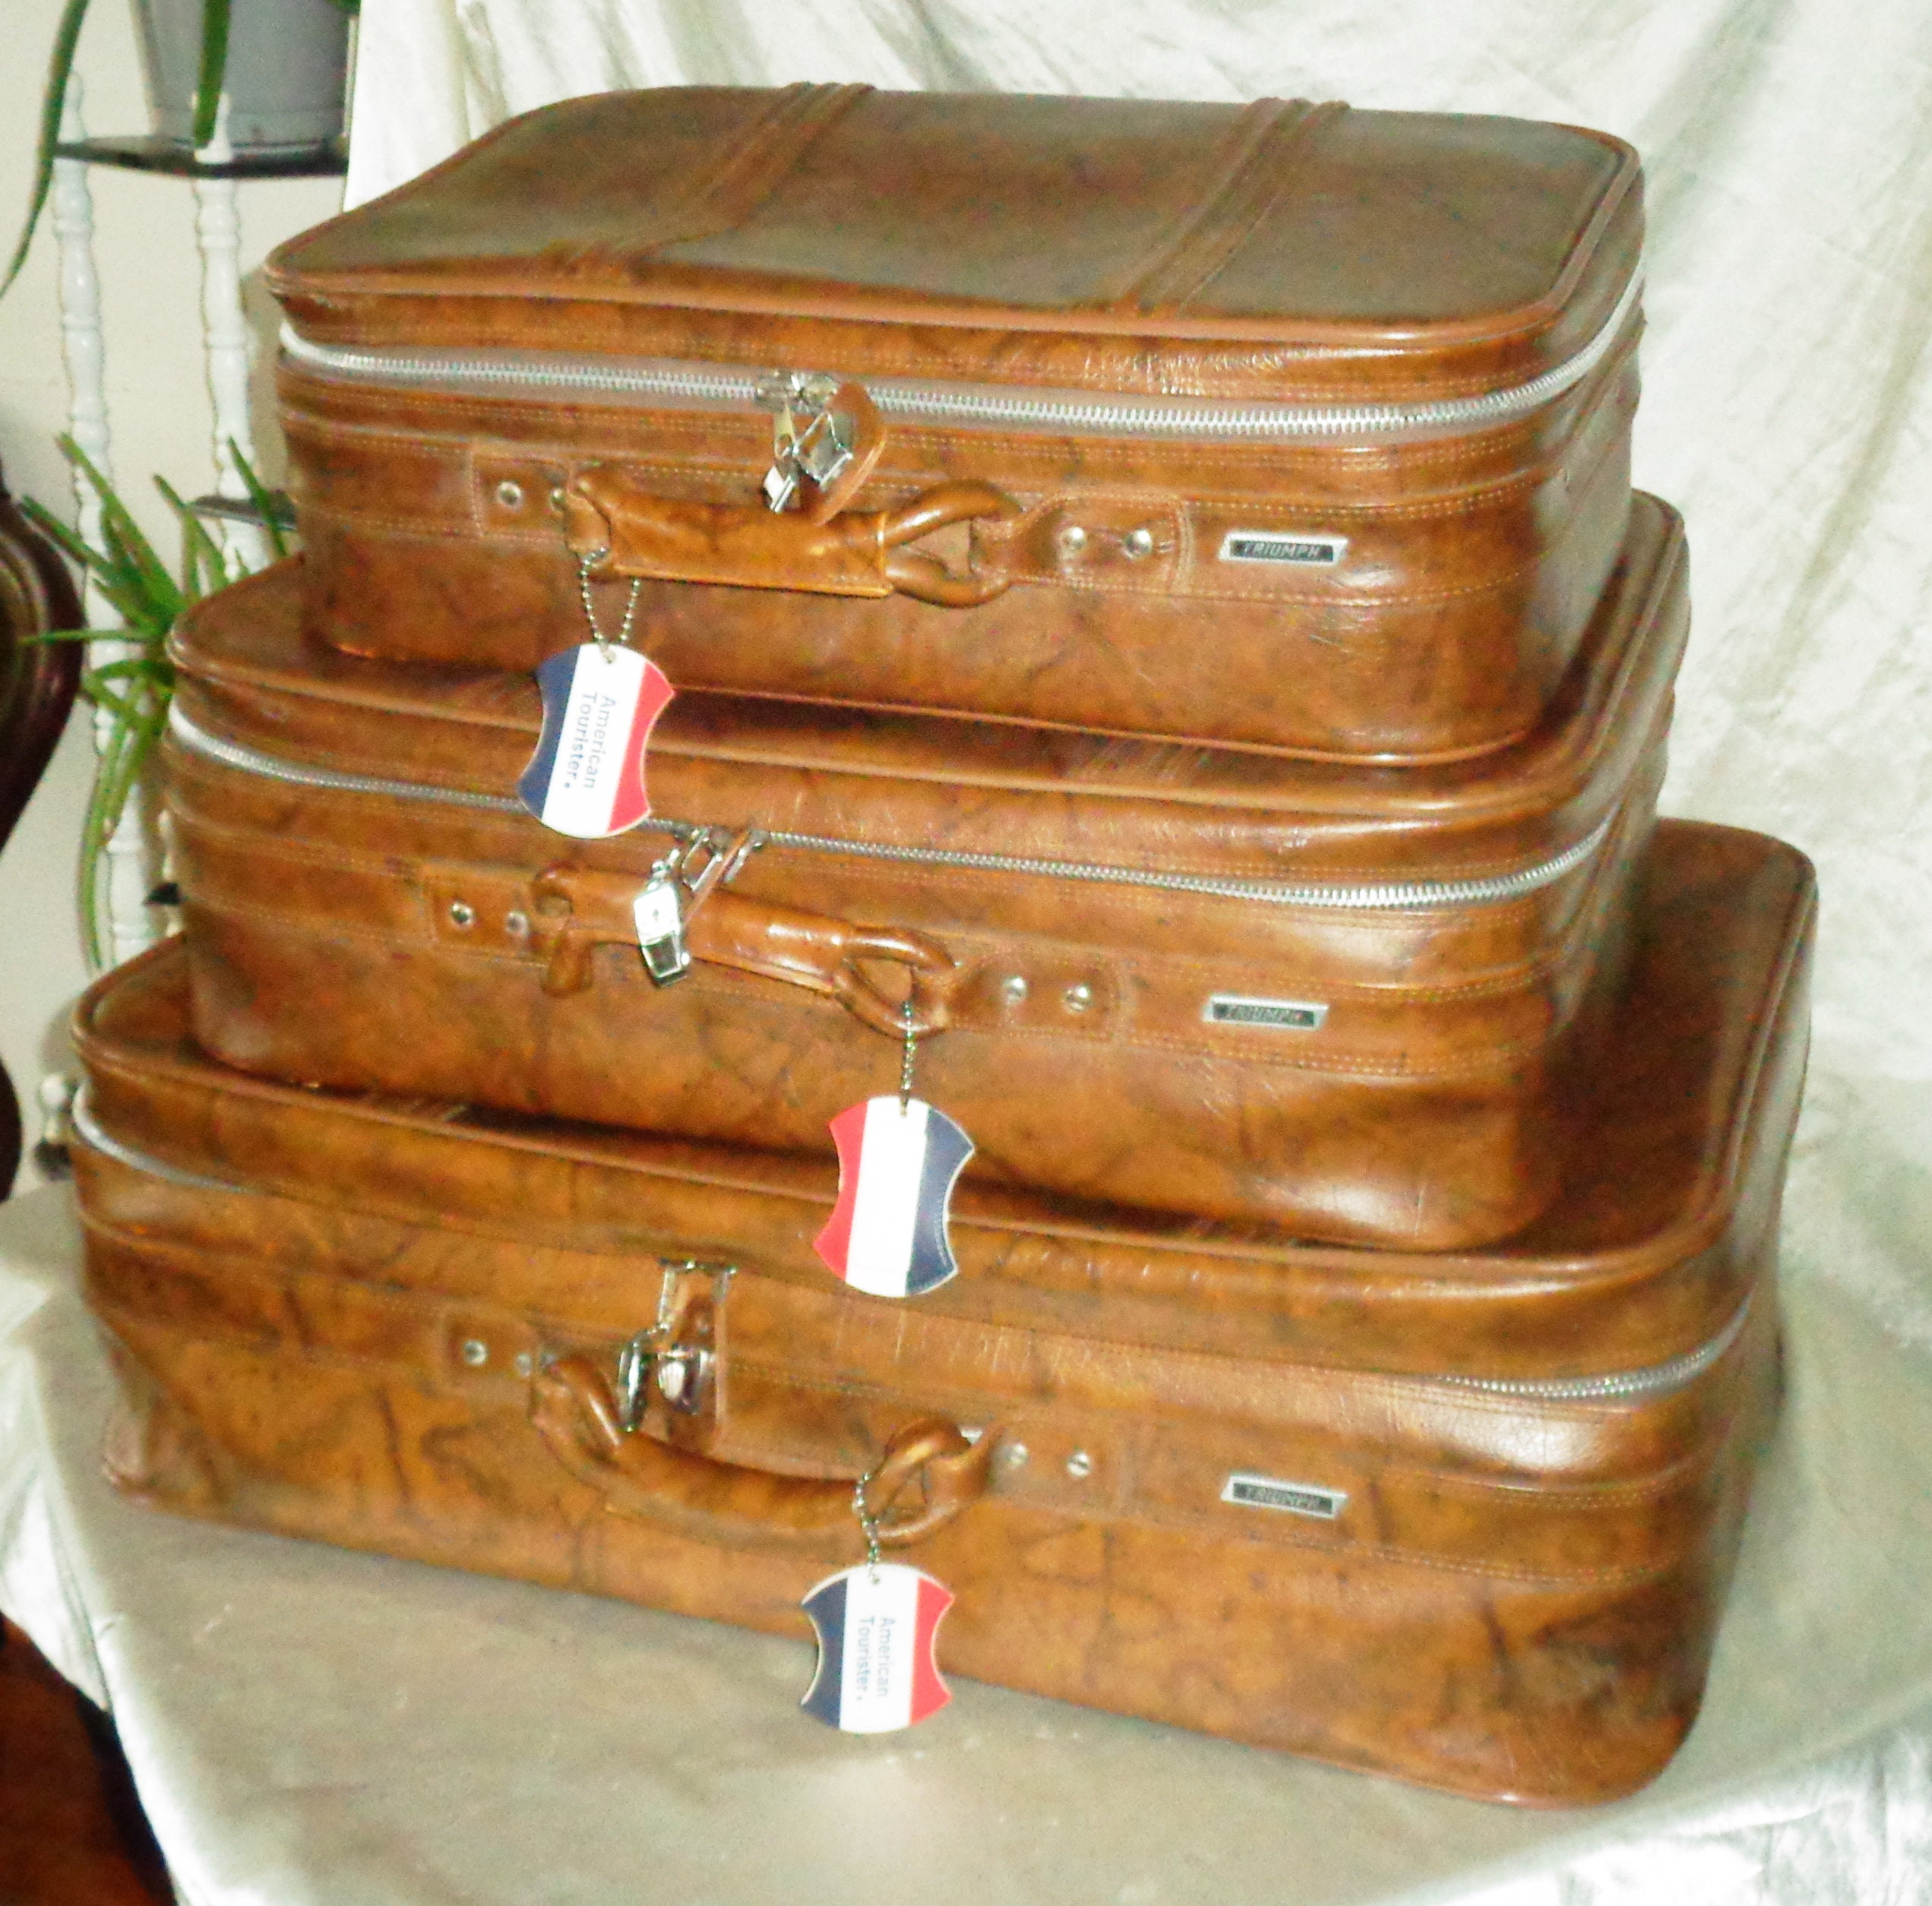 Vintage Luggage Retro Blue Vinyl Suitcase Set Retro Travel Bag 